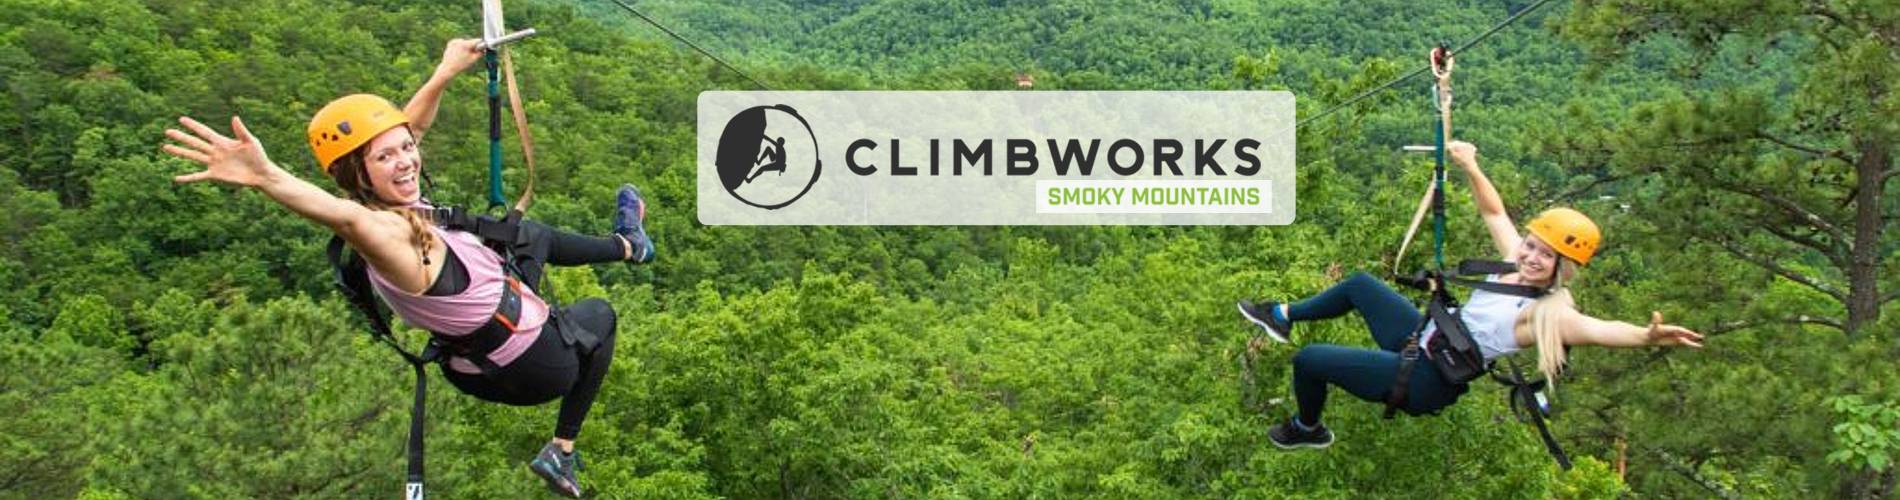 Climb Works Smoky Mountains